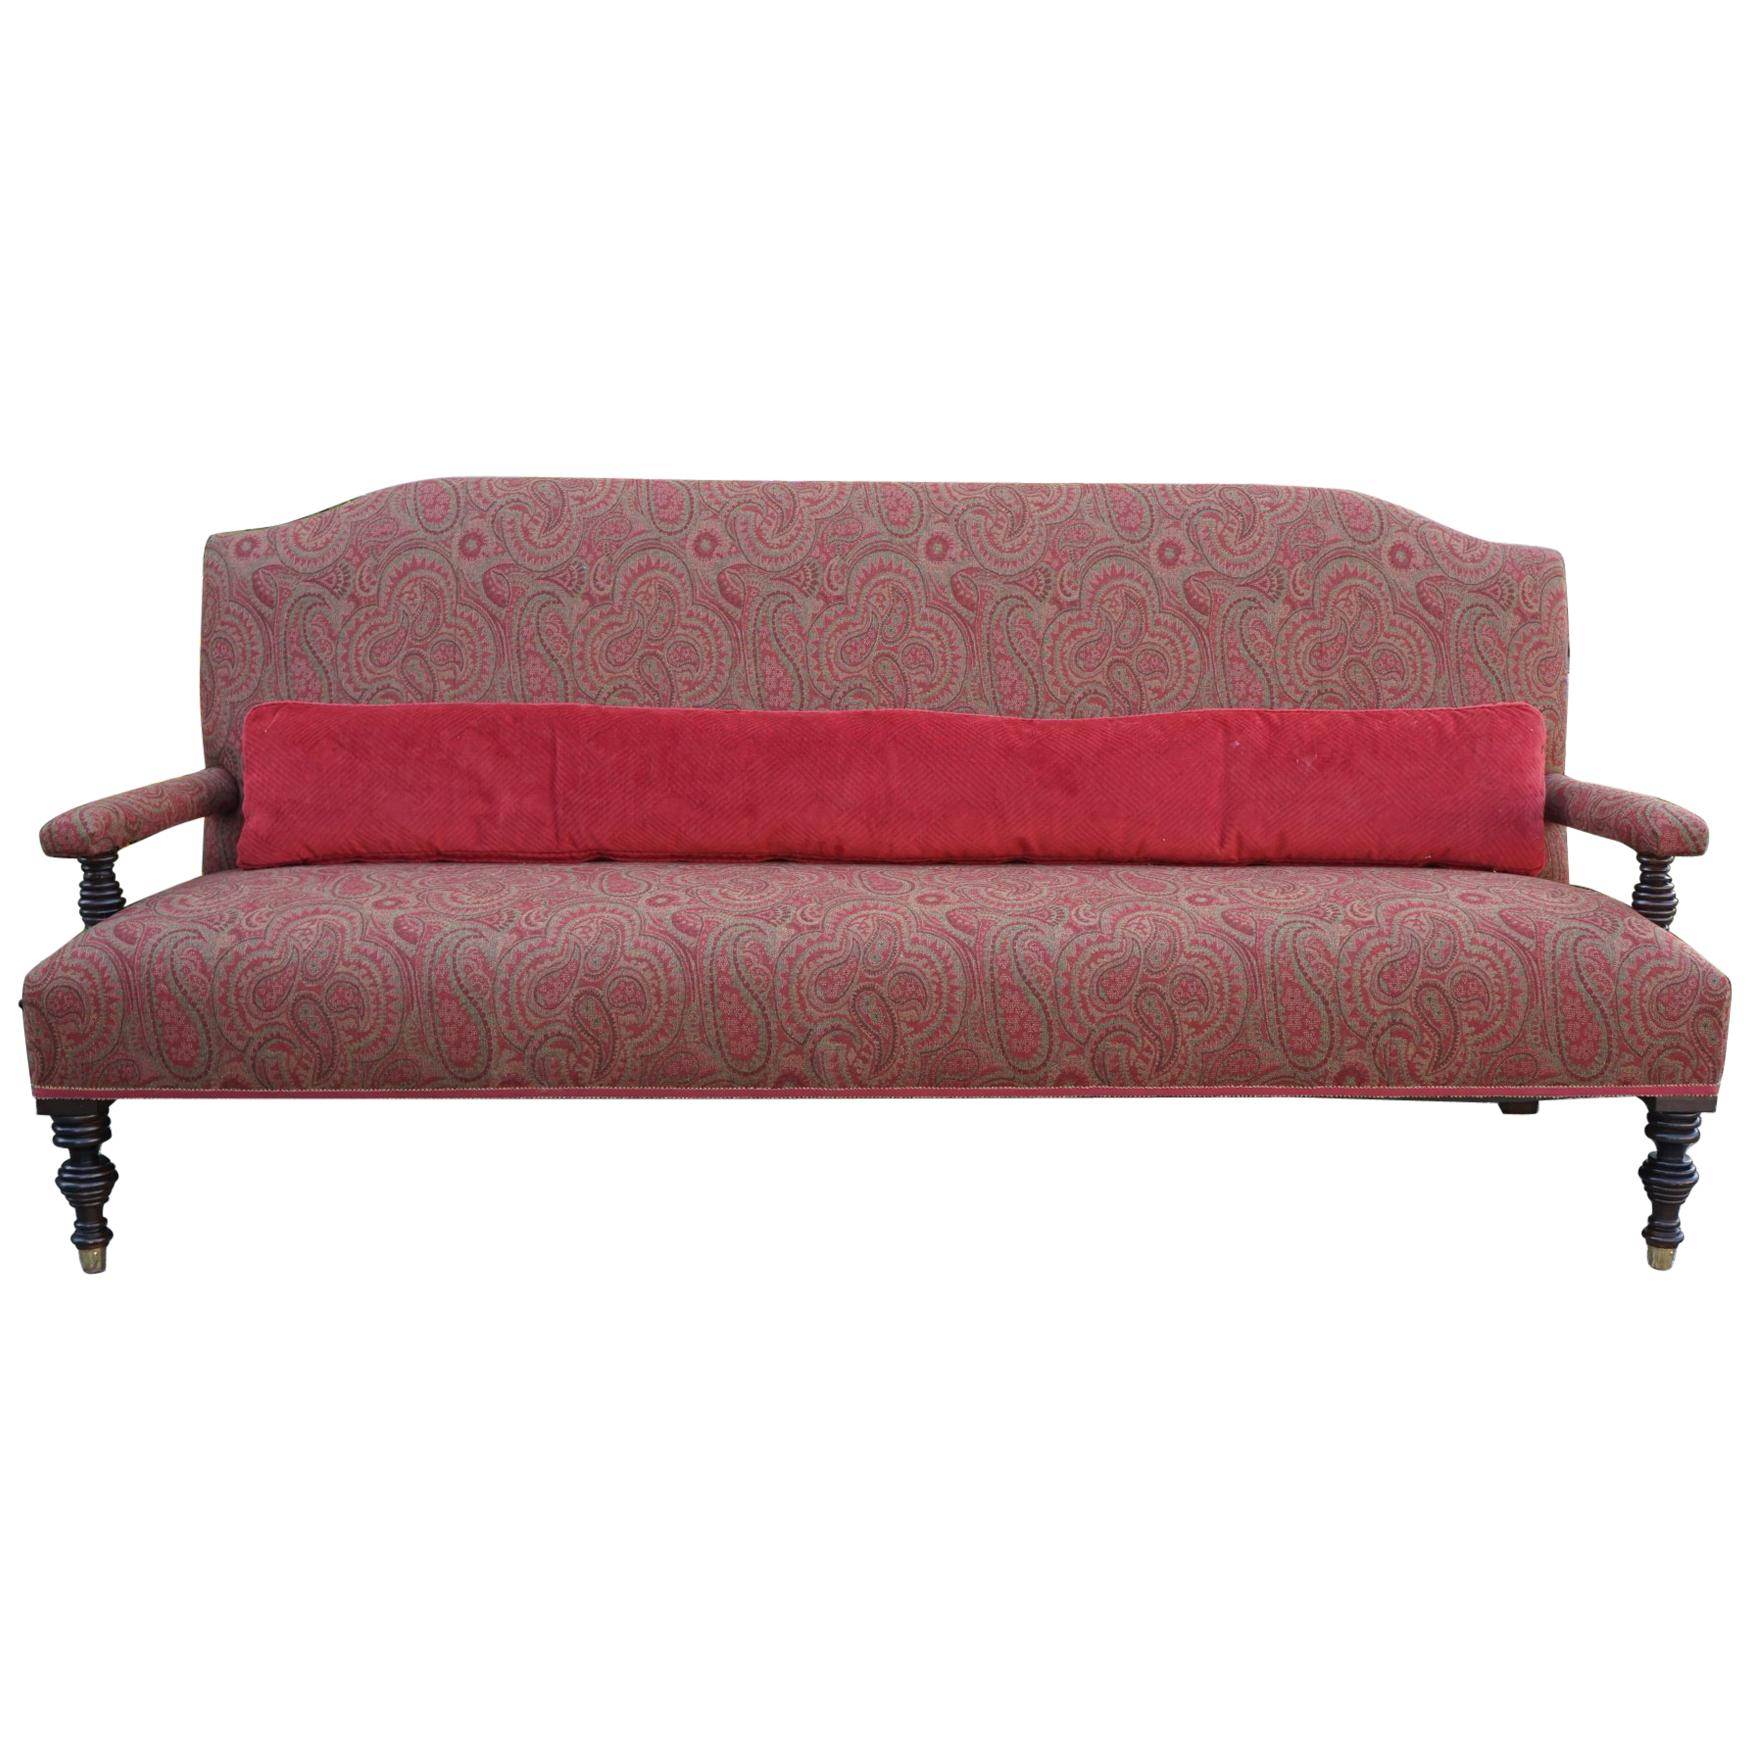 Vintage Edwardian Style Sofa For Sale